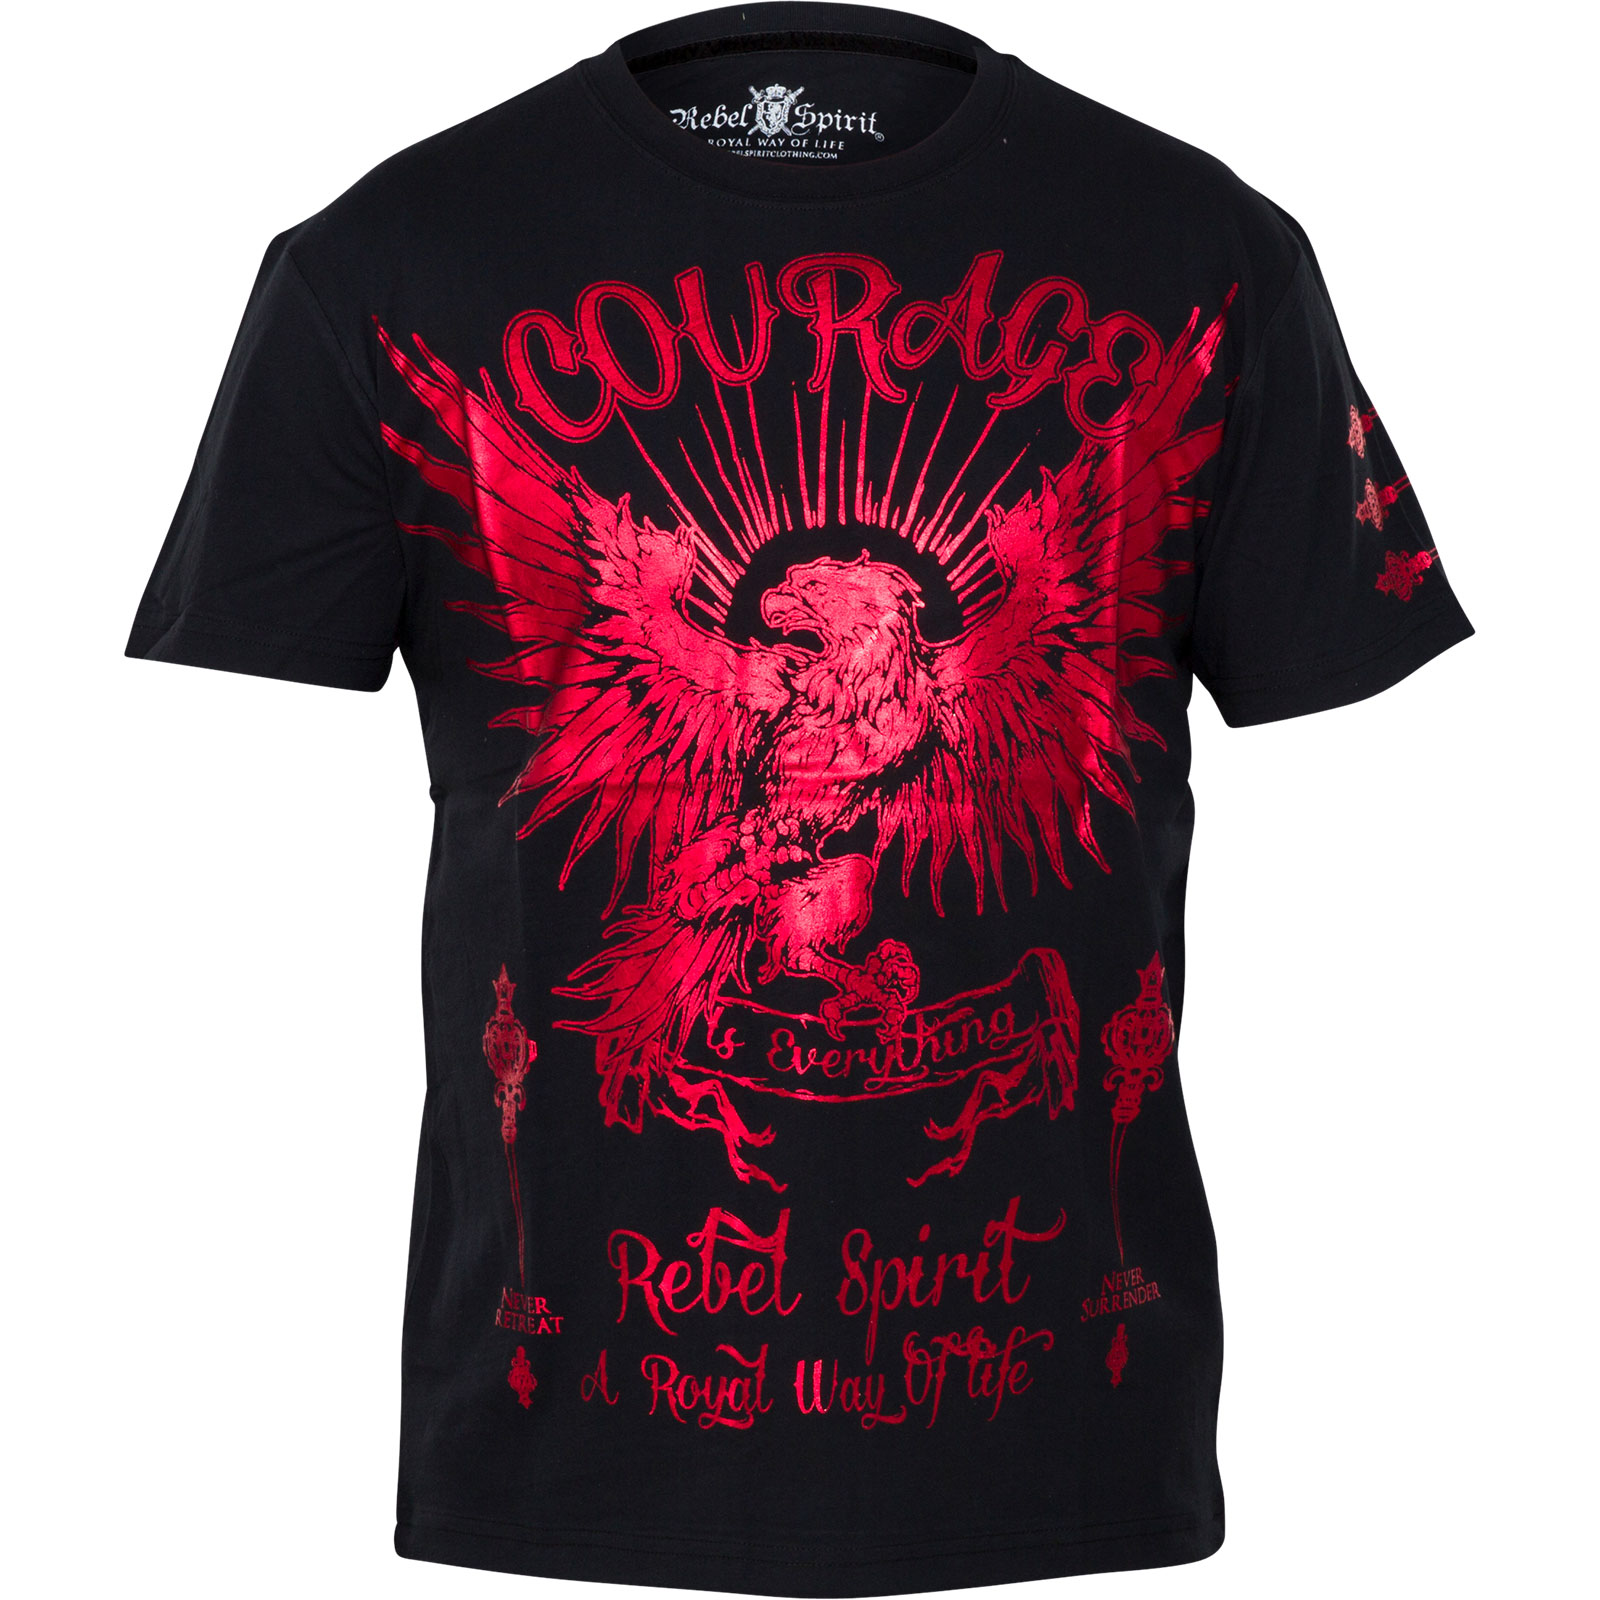 Rebel Spirit T-Shirt SSK141706 - Shirt with highly detailed red foil ...